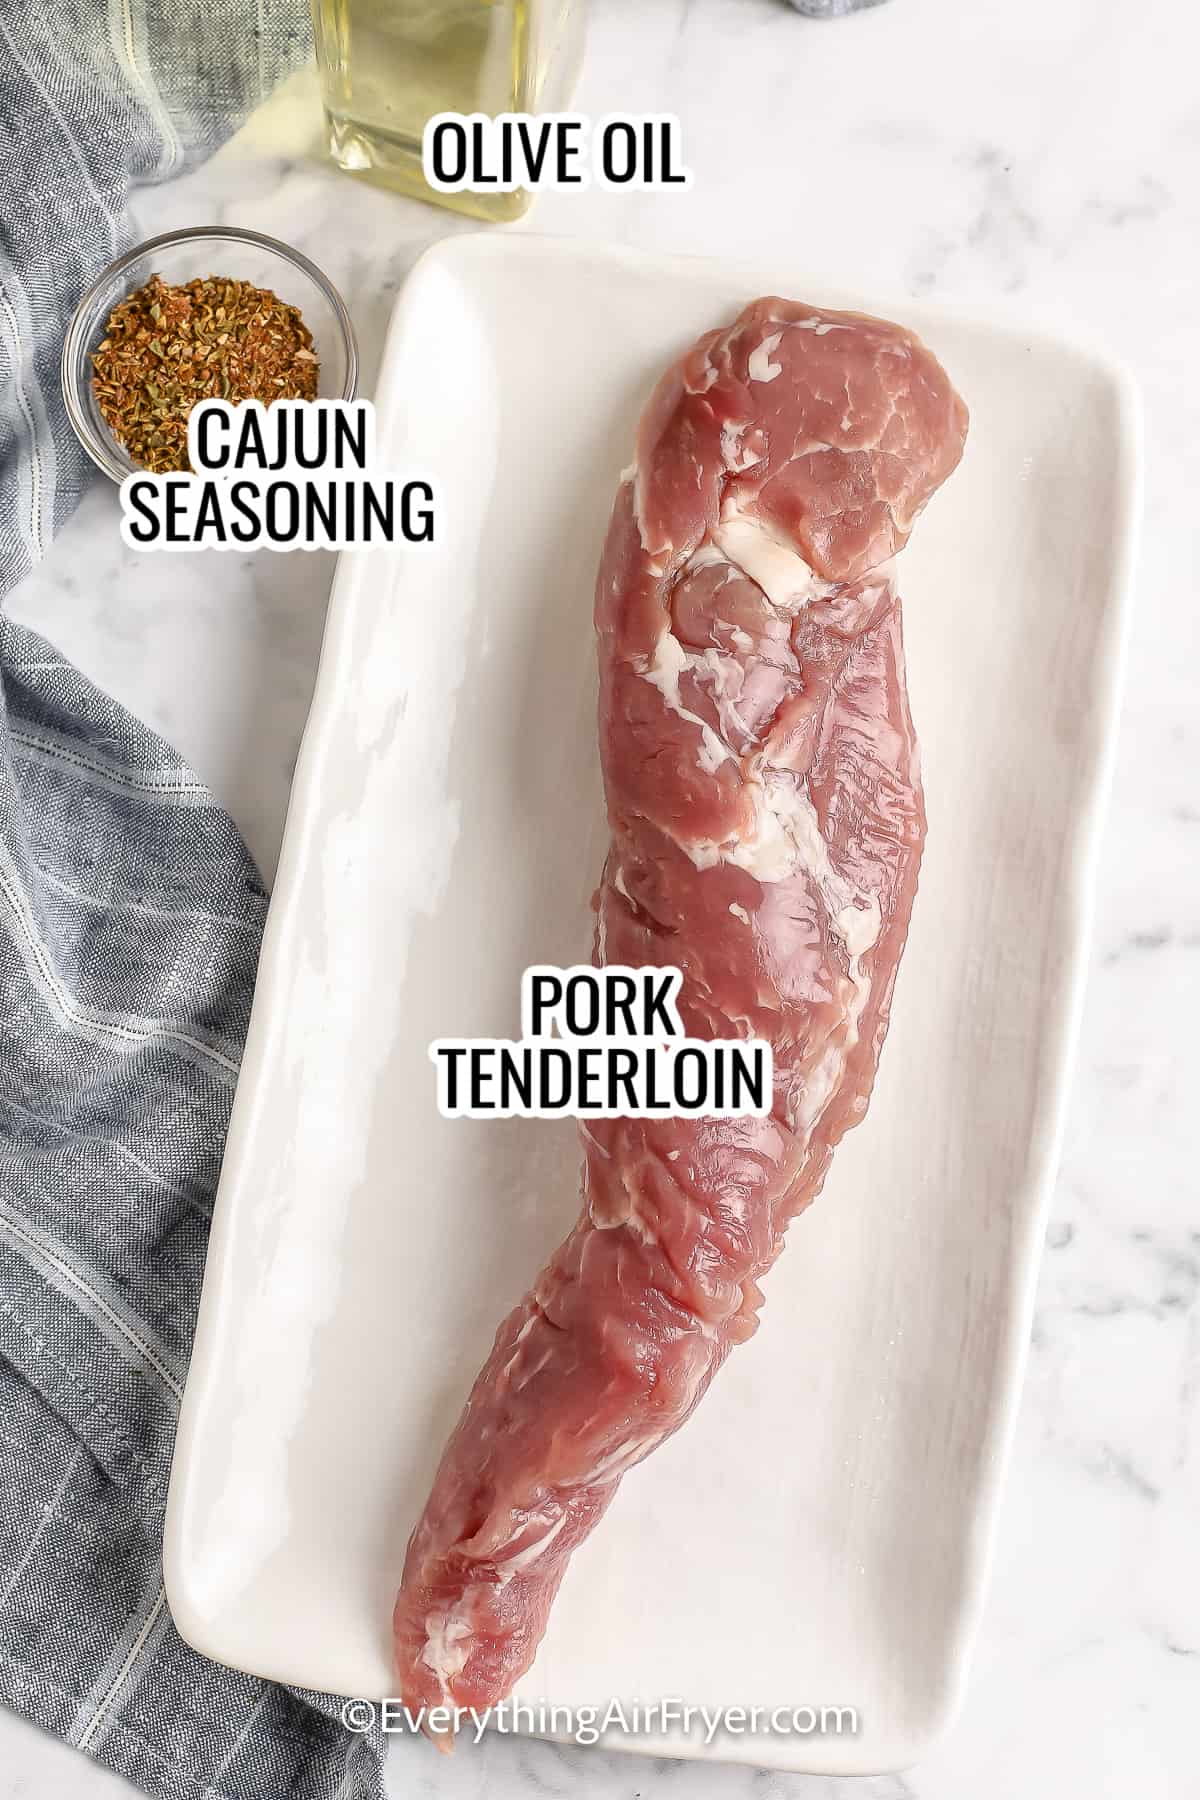 ingredients assembled to make air fryer pork bites including pork tenderloin, cajun seasoning, and olive oil